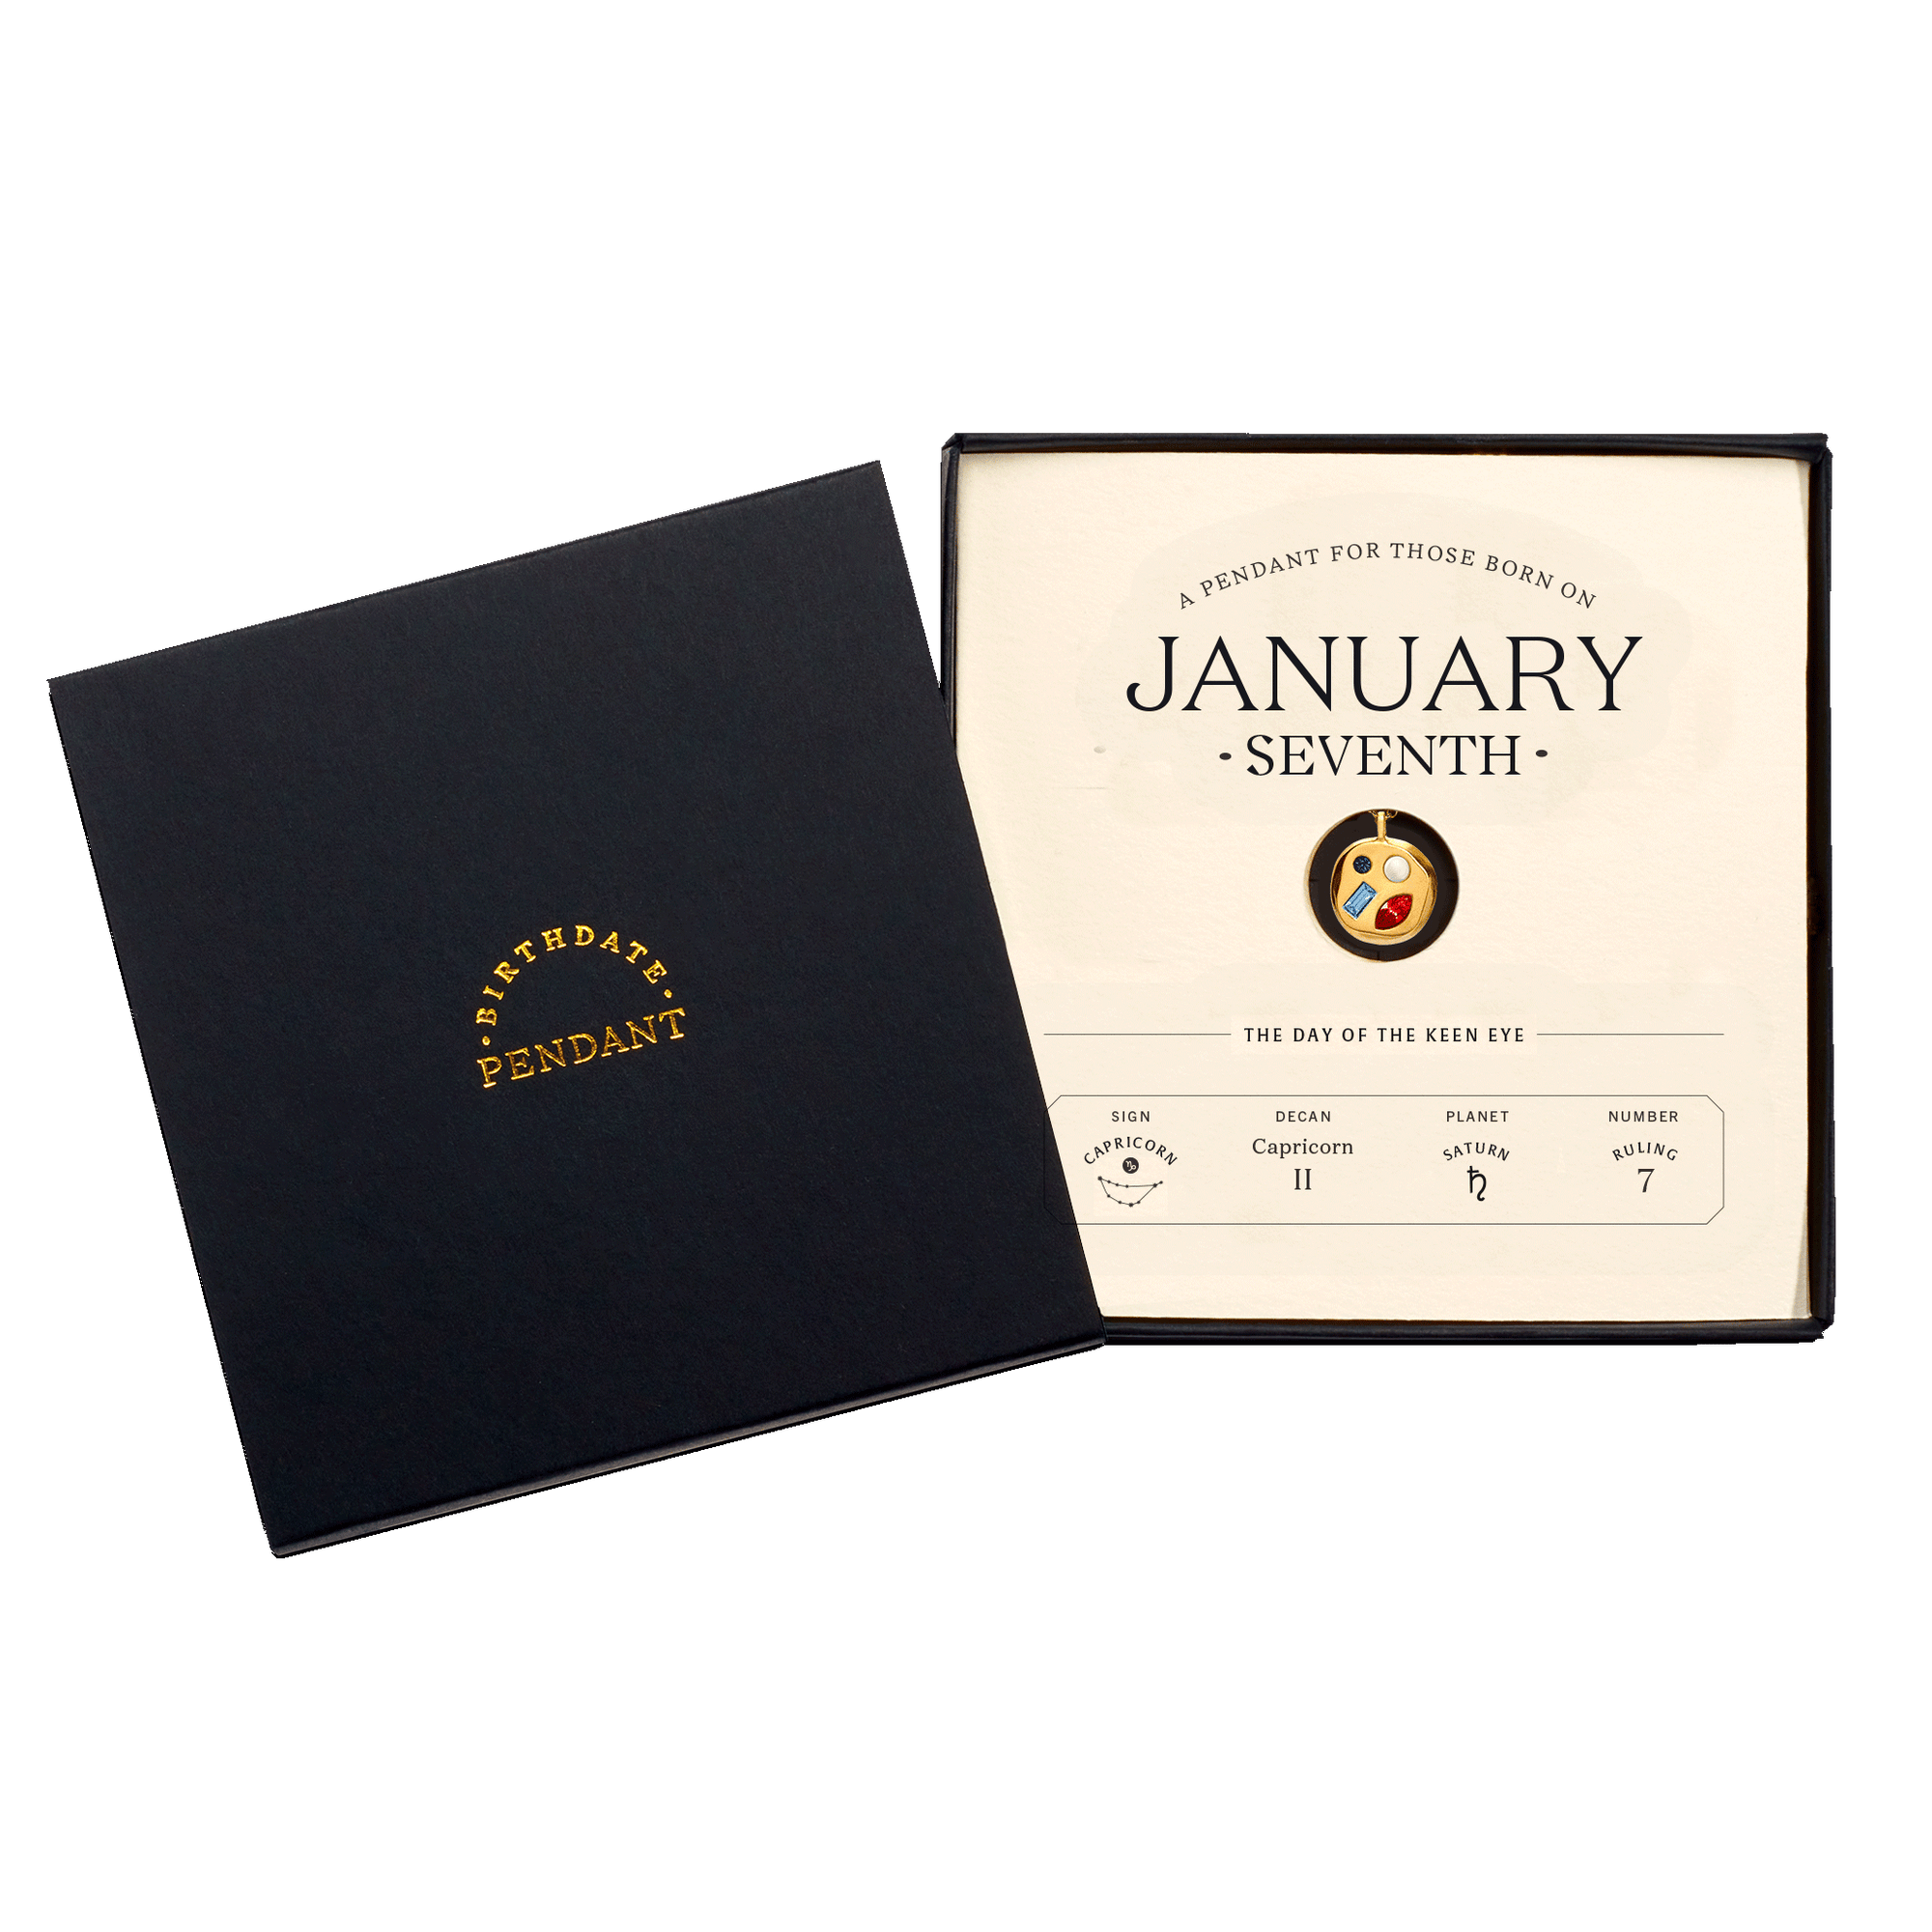 The January Seventh Pendant inside its box